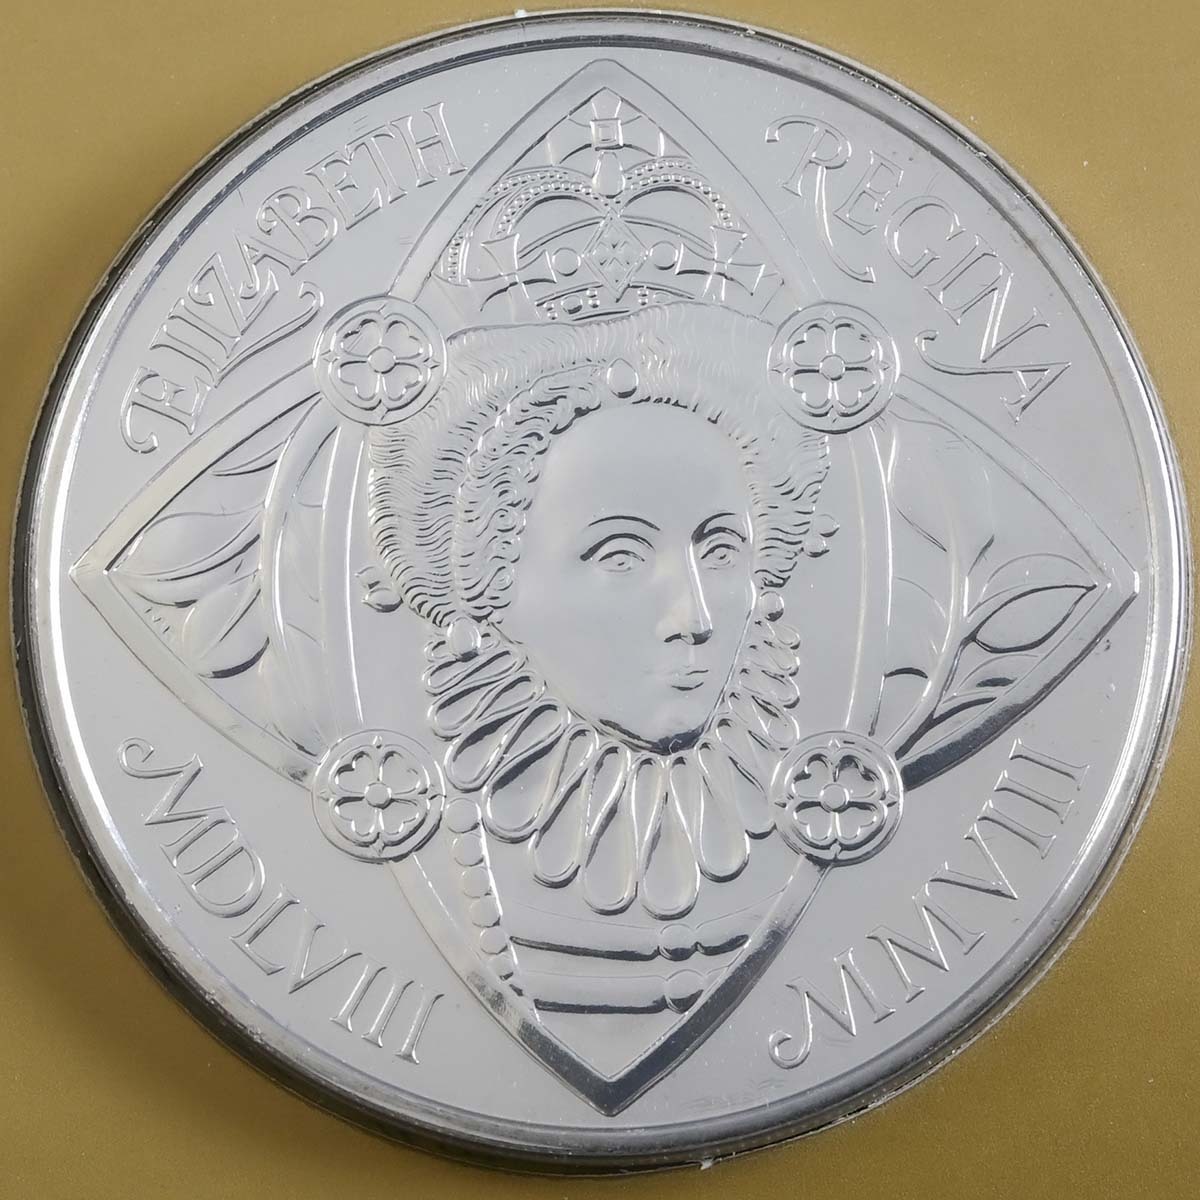 2008 Queen Elizabeth I Accession Anniversary Five Pound Crown Brilliant Uncirculated Coin In Folder Reverse